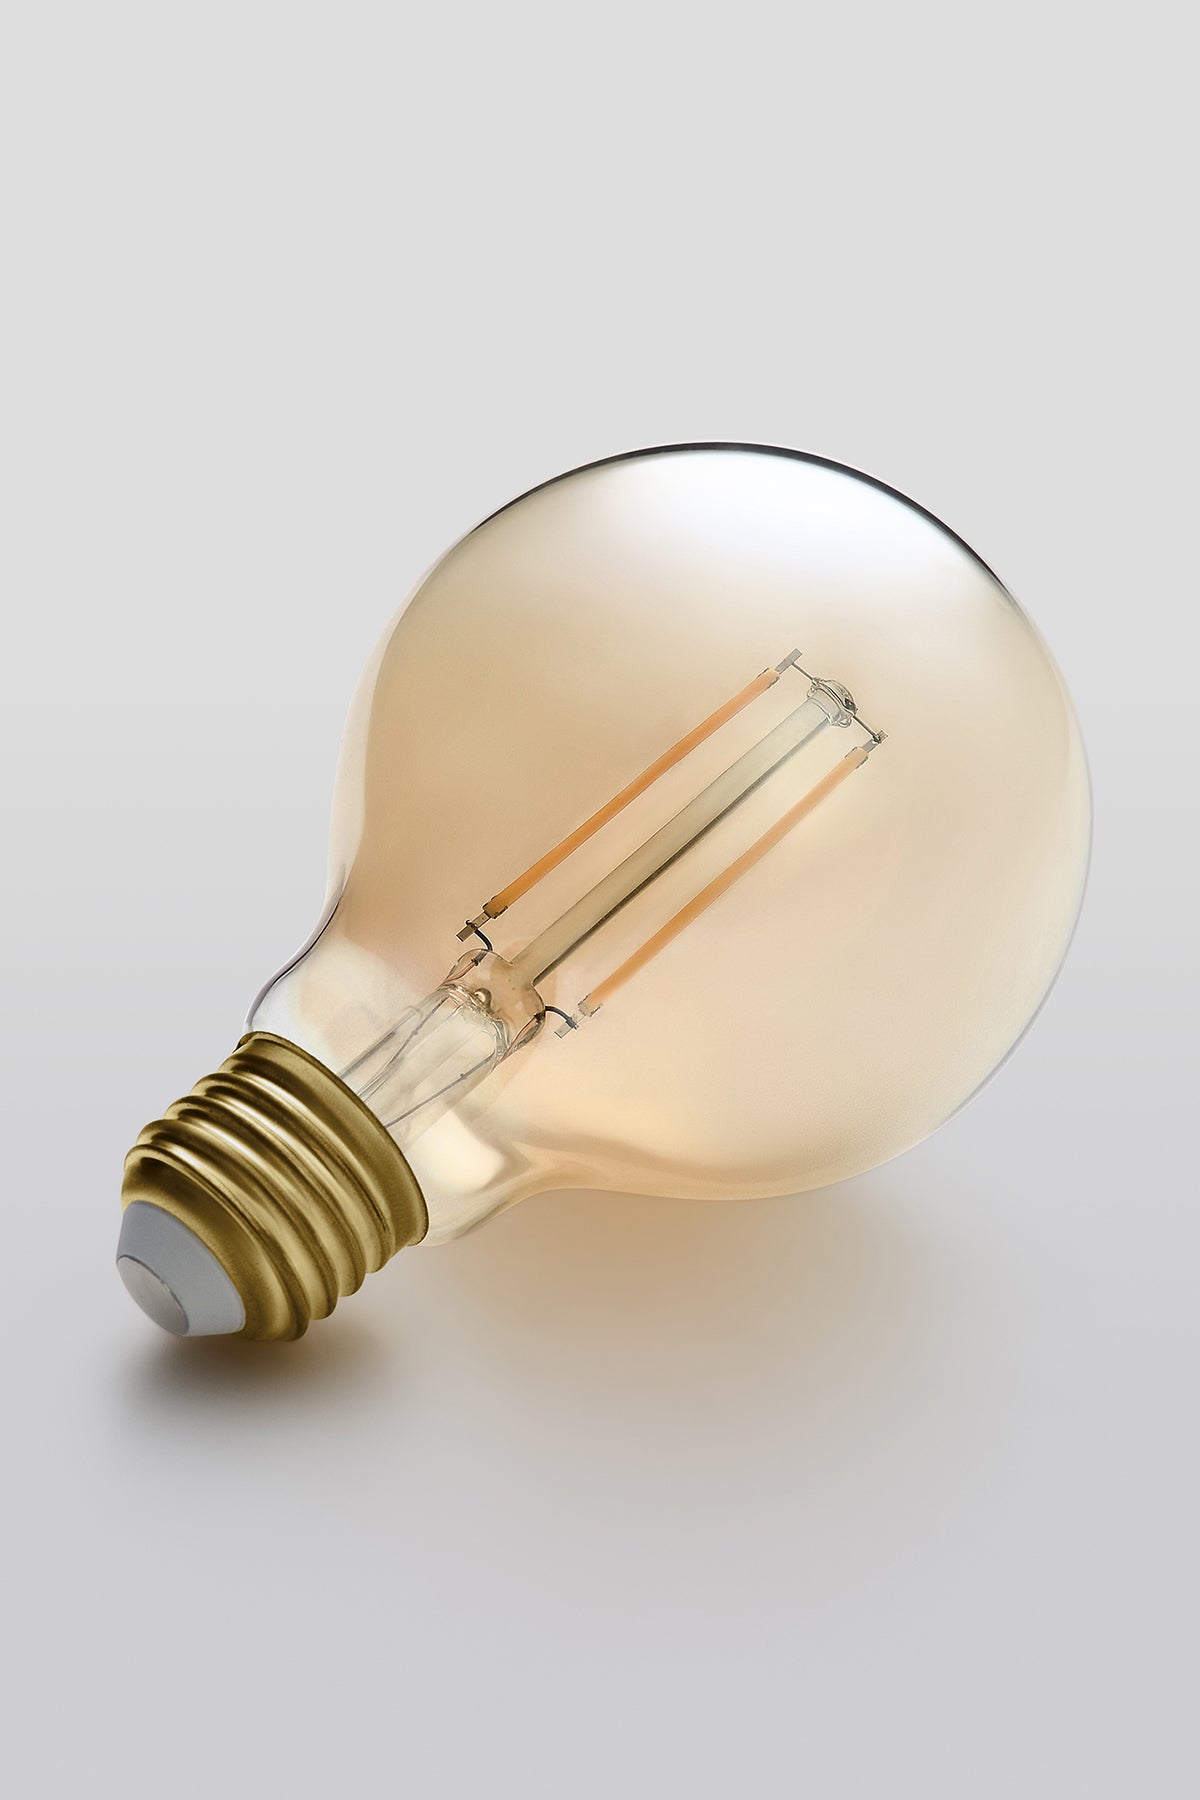 Modern G25 LED light bulb with warm vintage Edison style glow